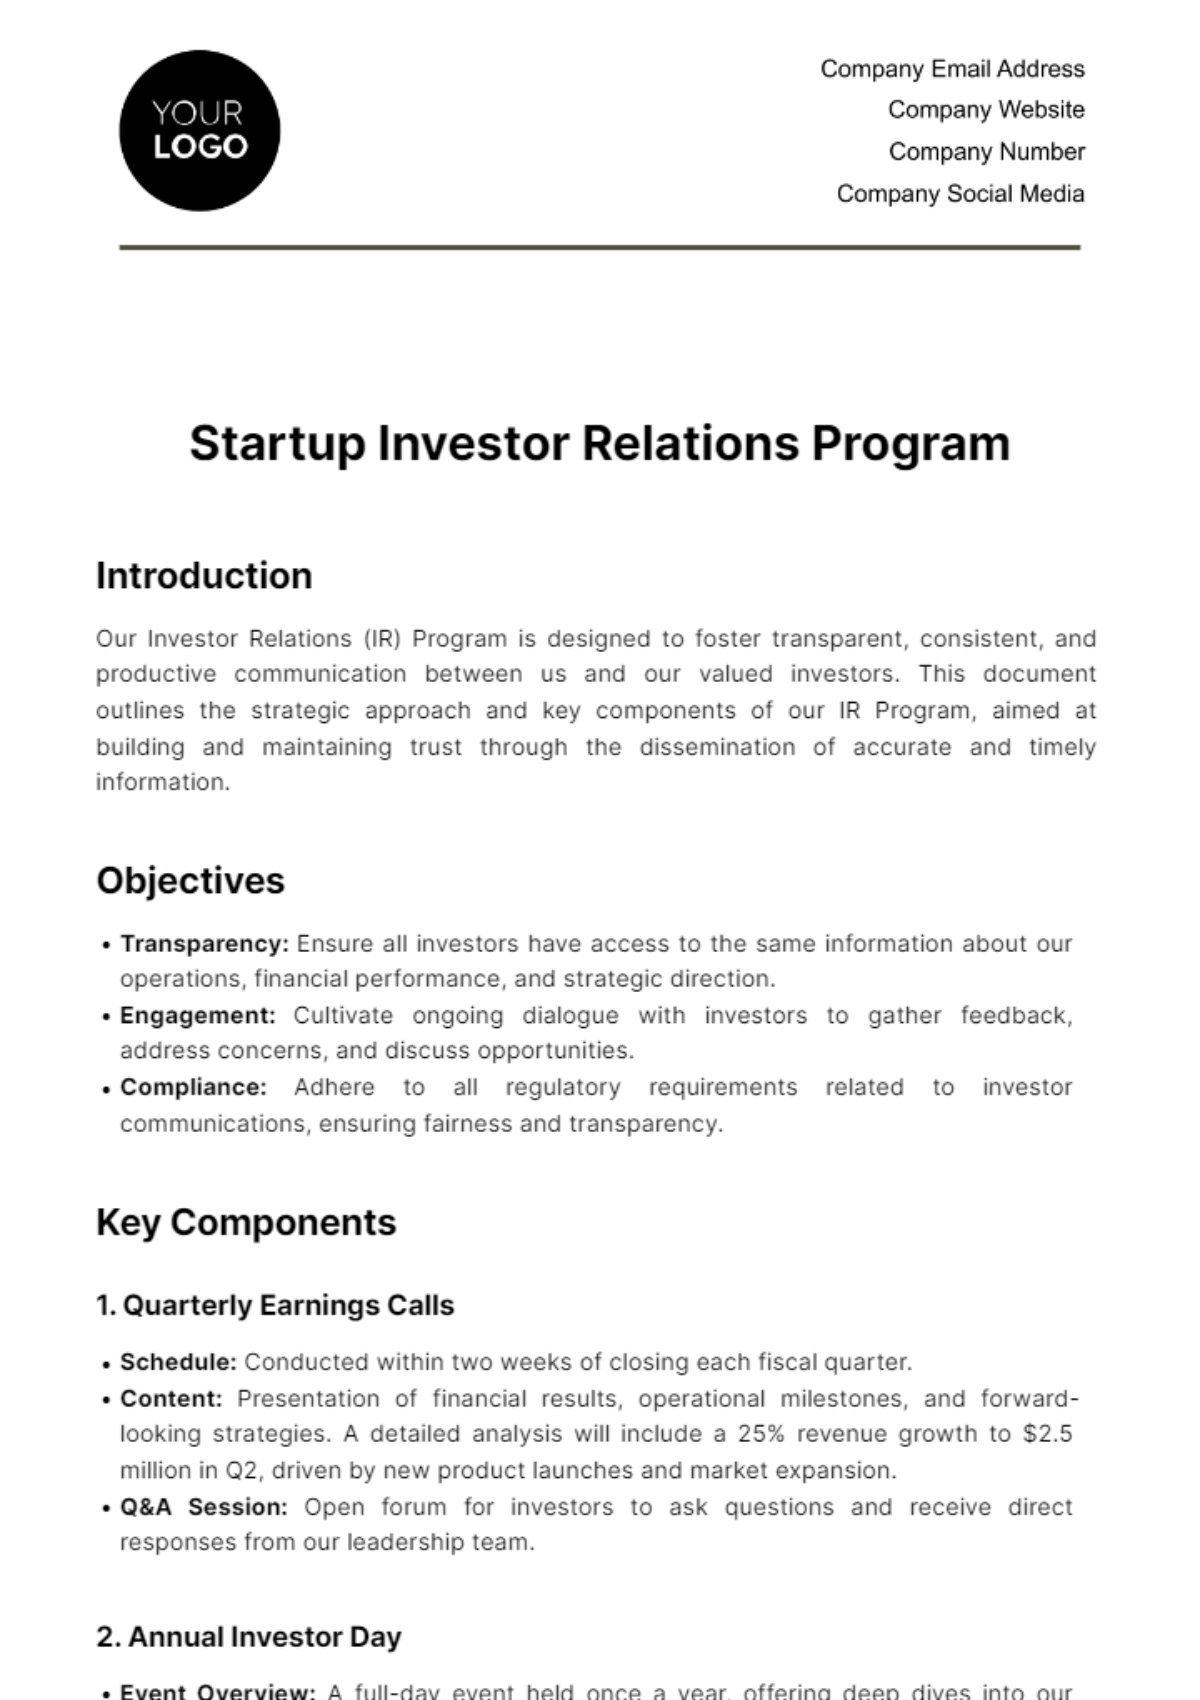 Free Startup Investor Relations Program Template